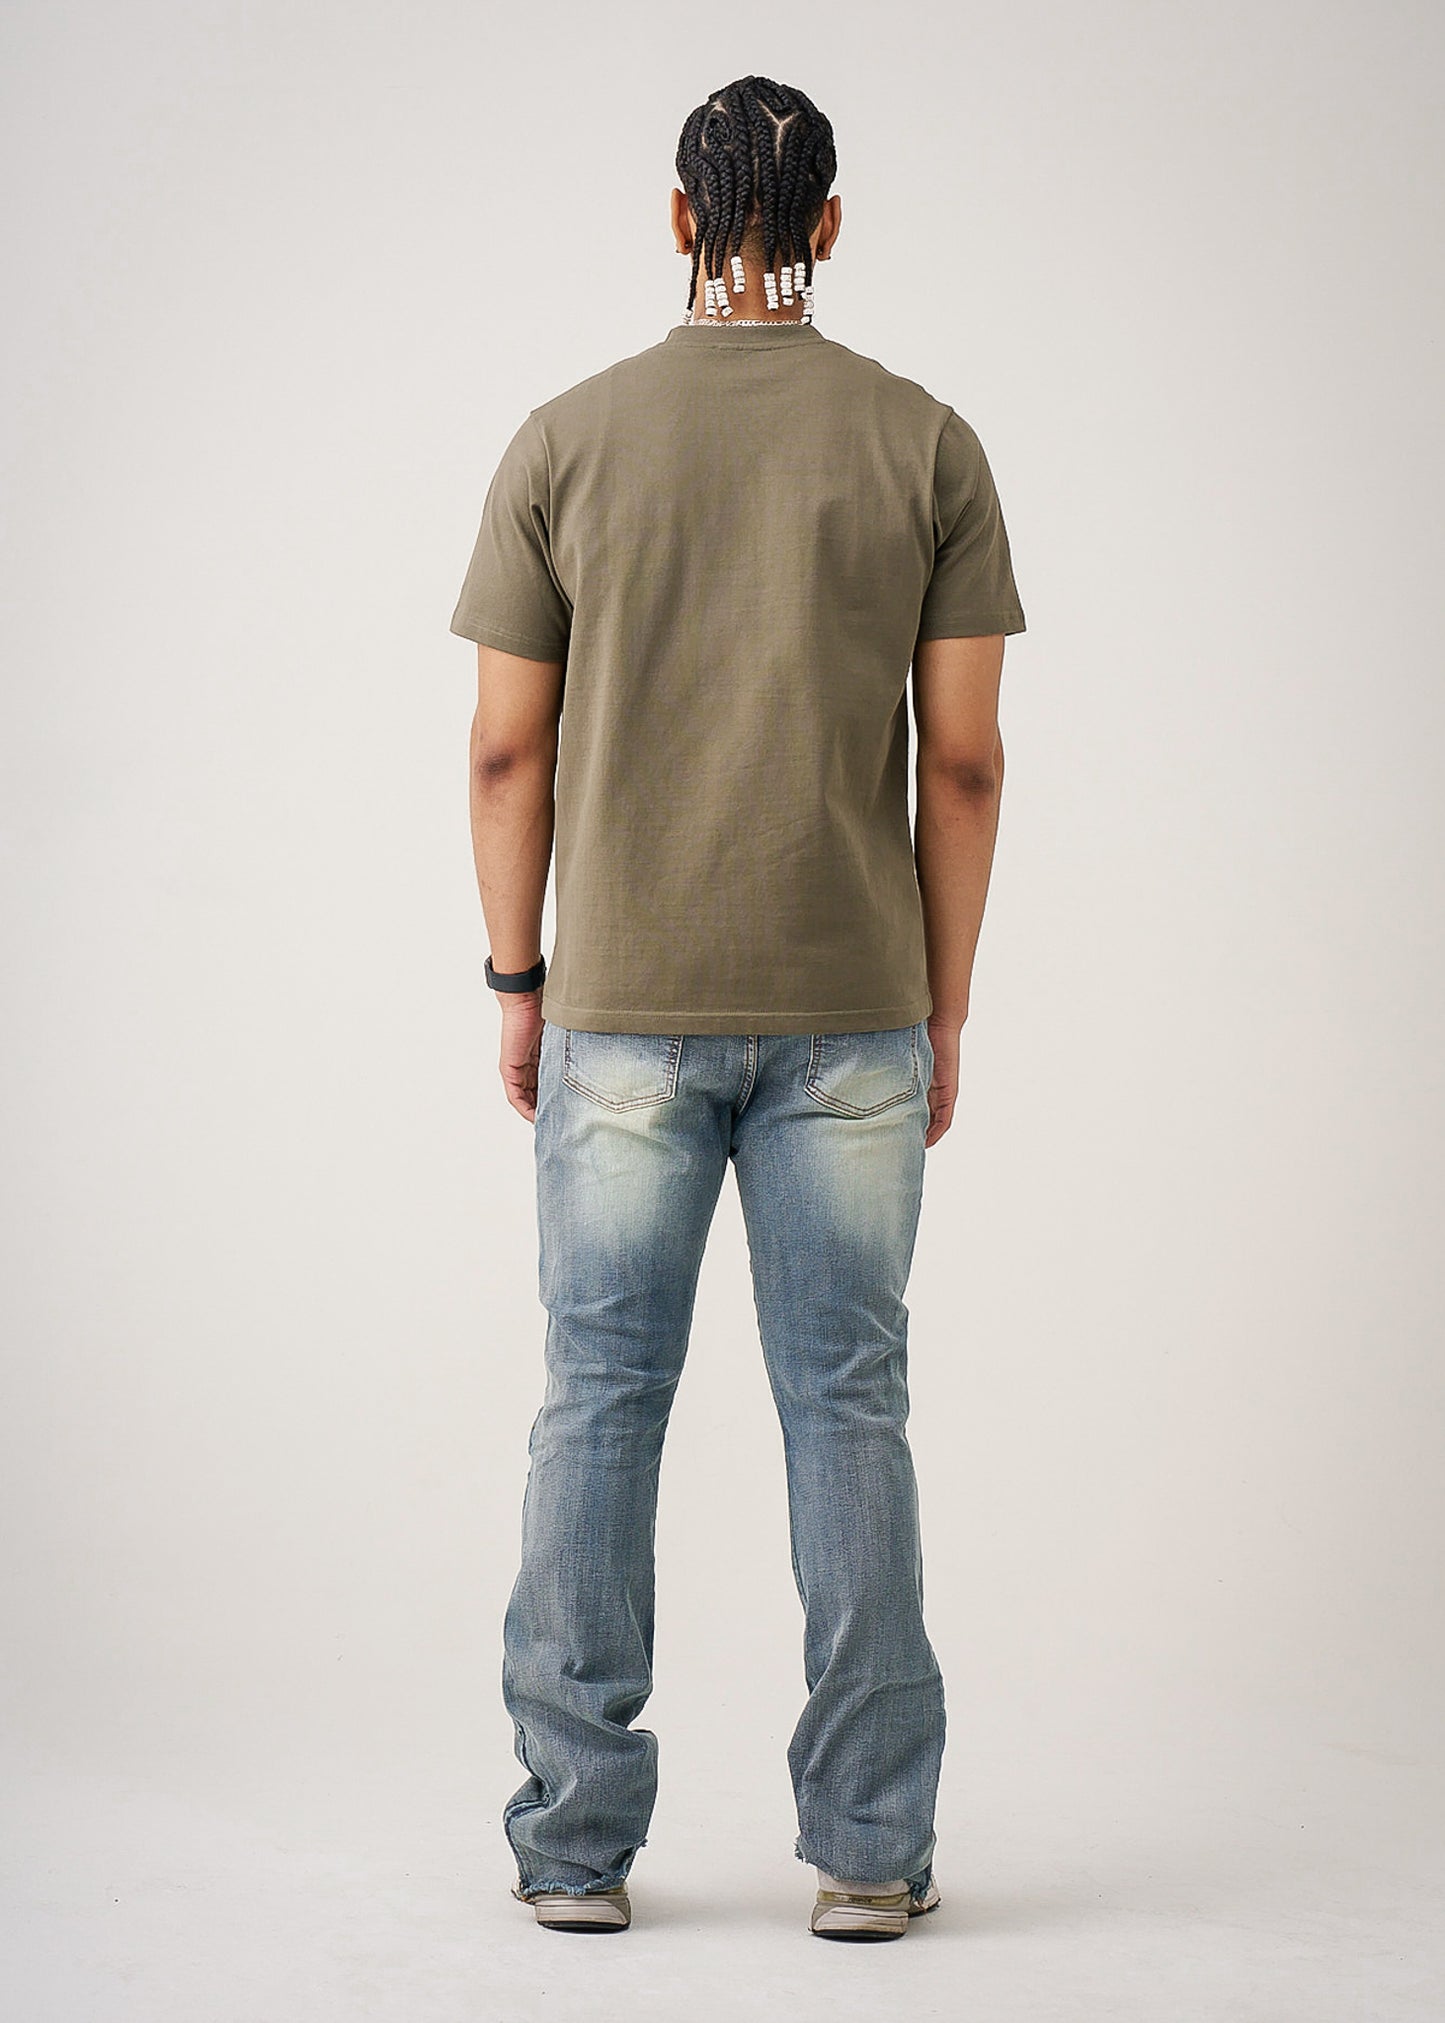 10 OZ Heavyweight Cotton T-Shirt